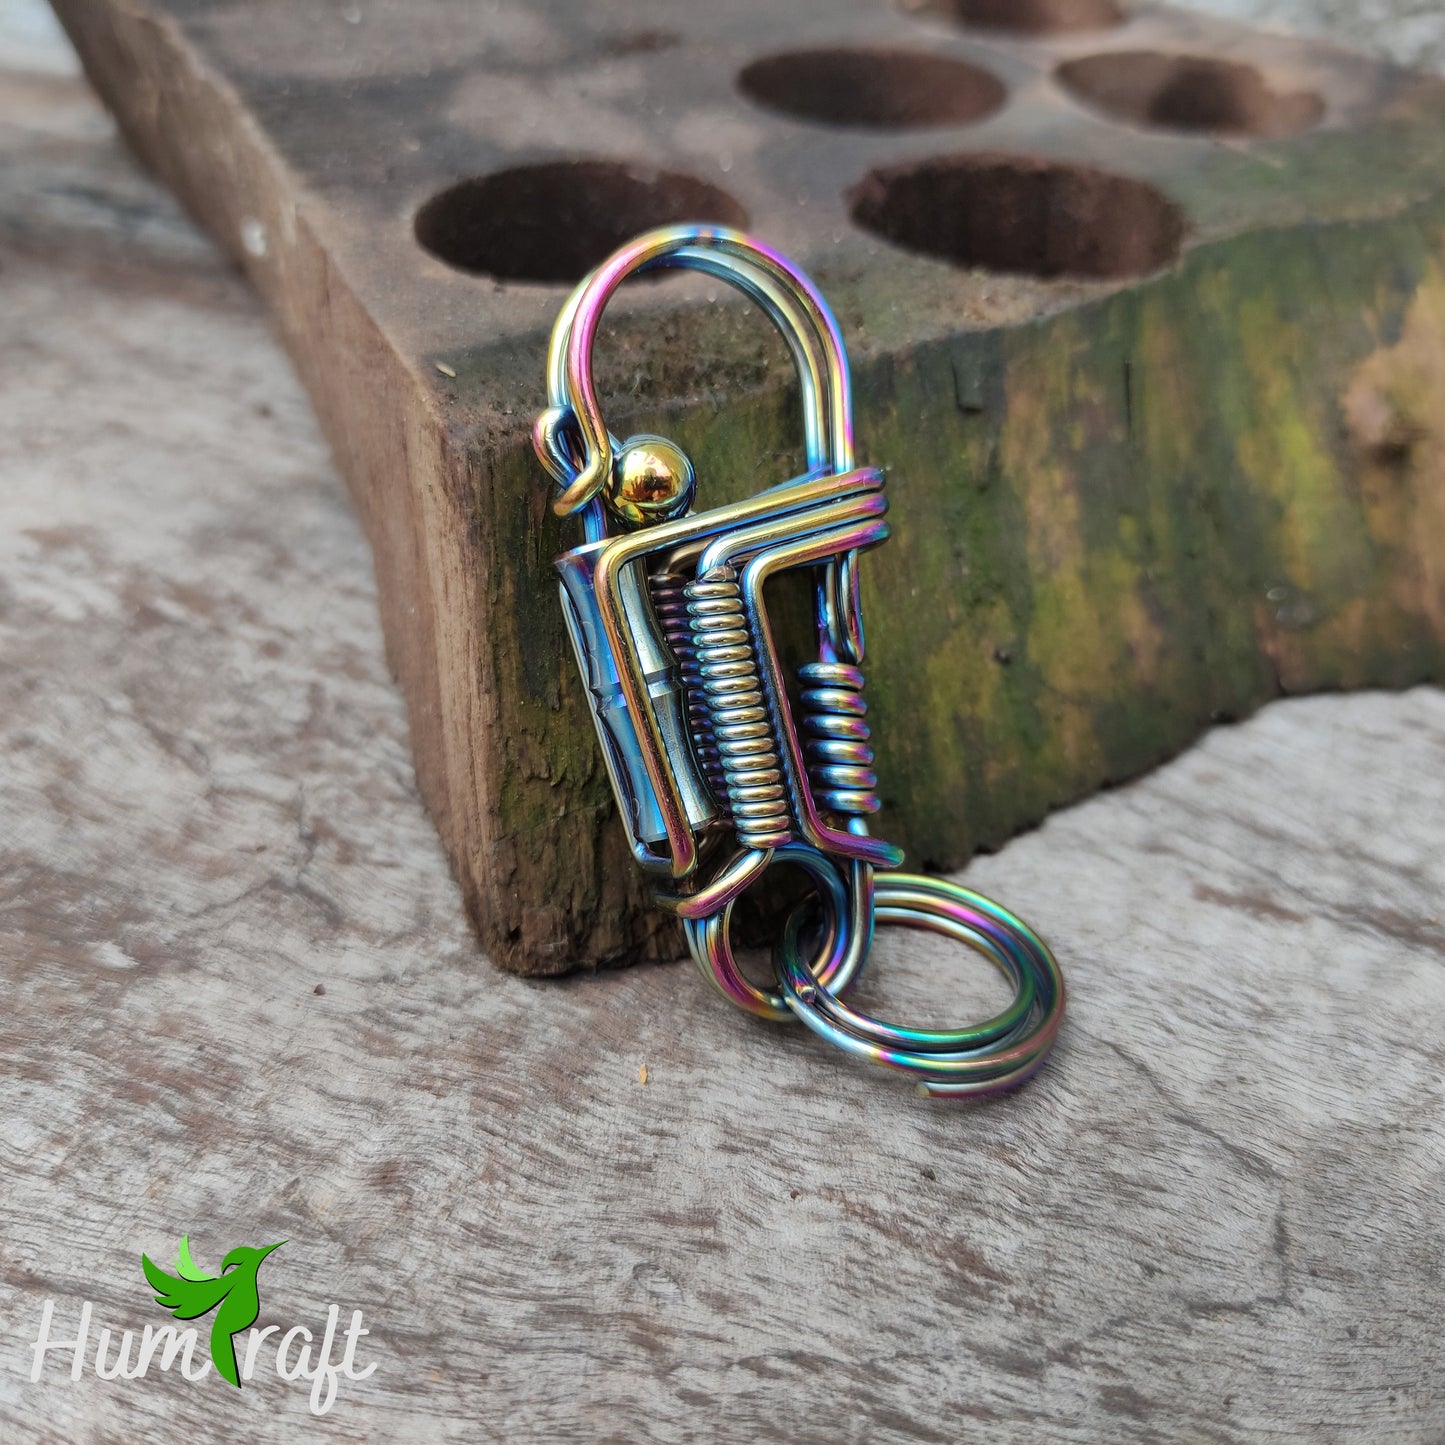 Handmade wire wrapped keychain